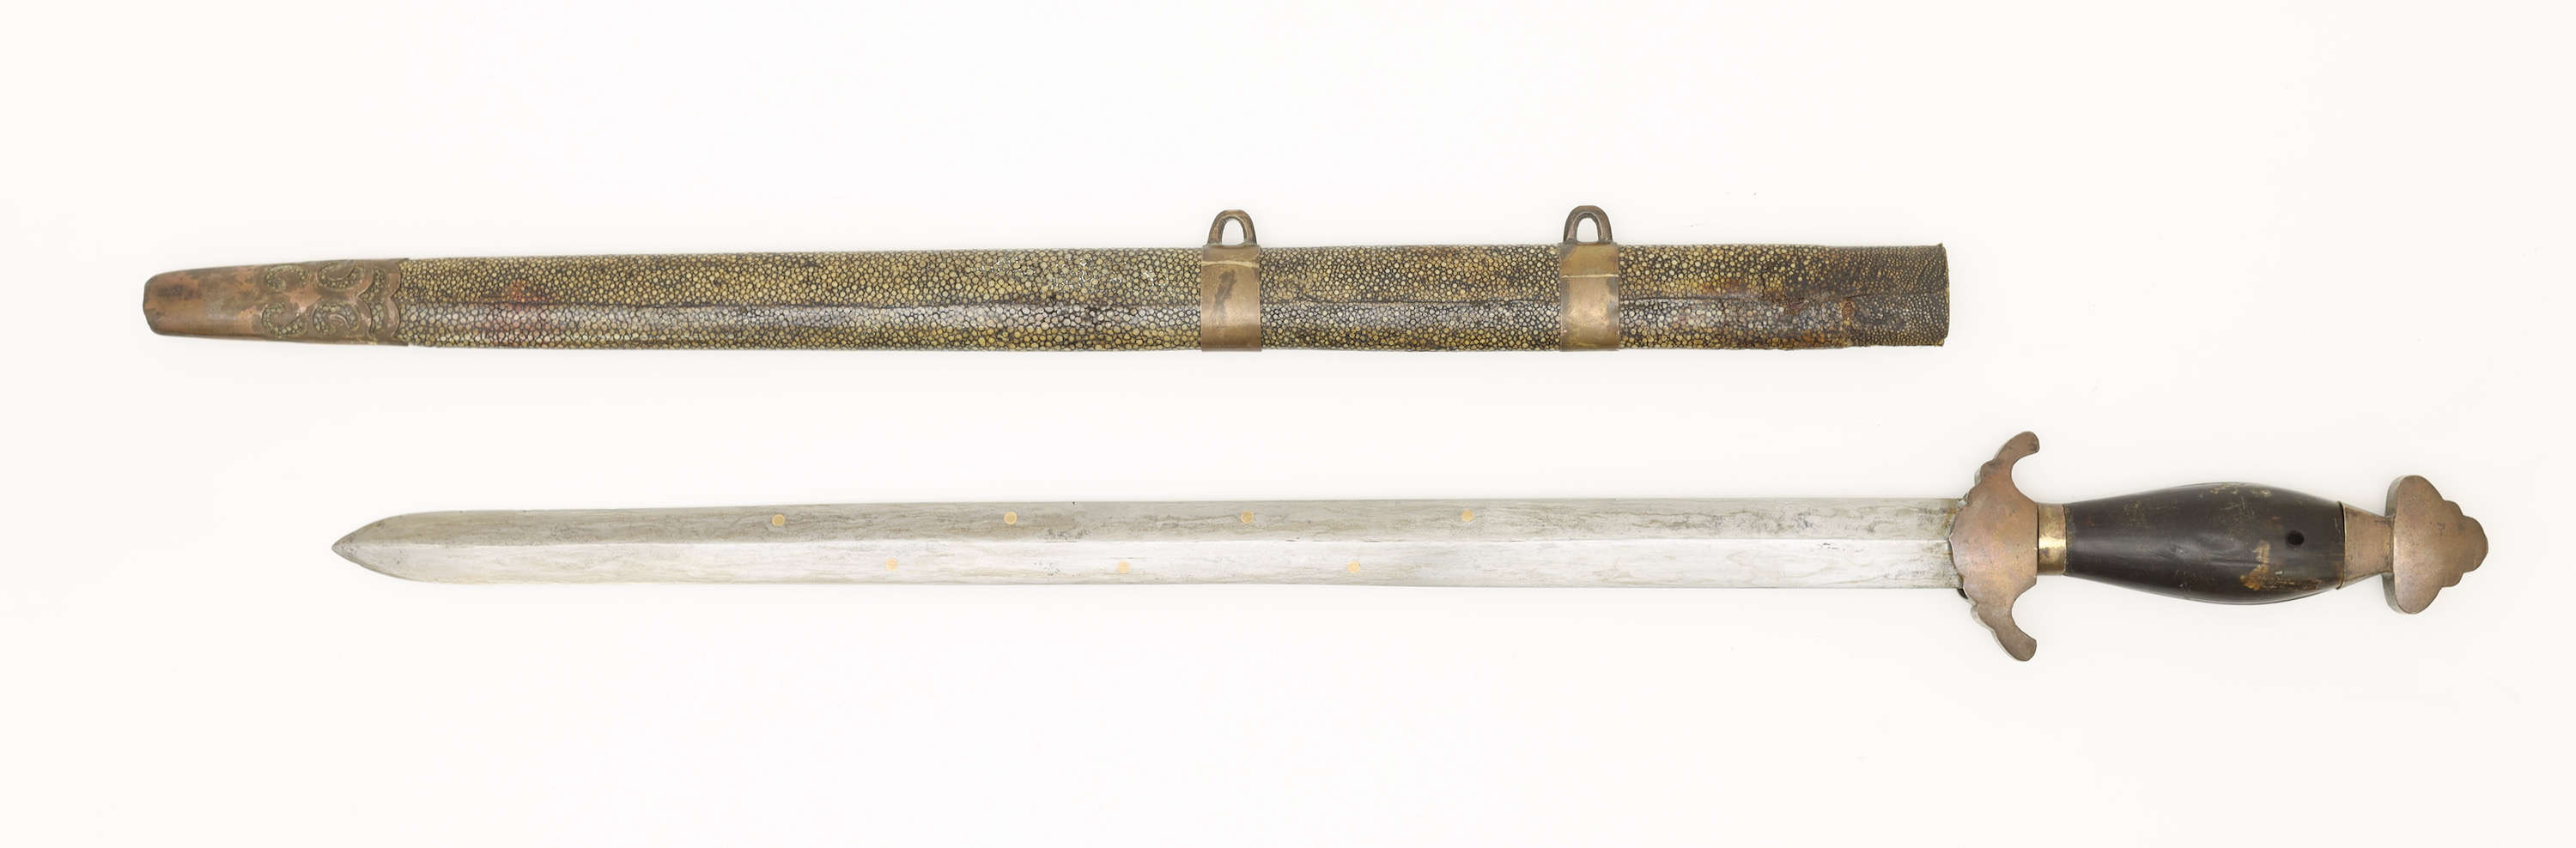 Antique Chinese fighting jian sword